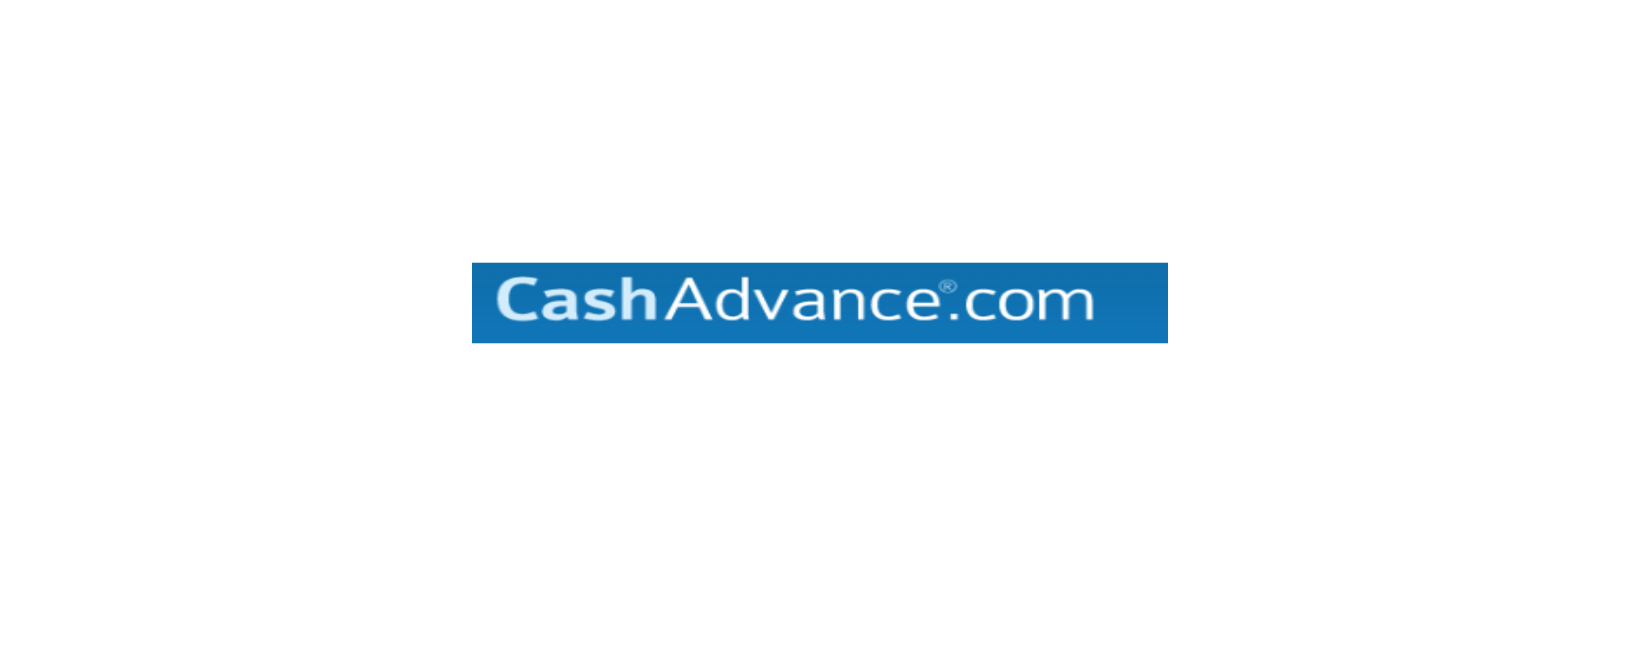 CashAdvance Discount Code 2022